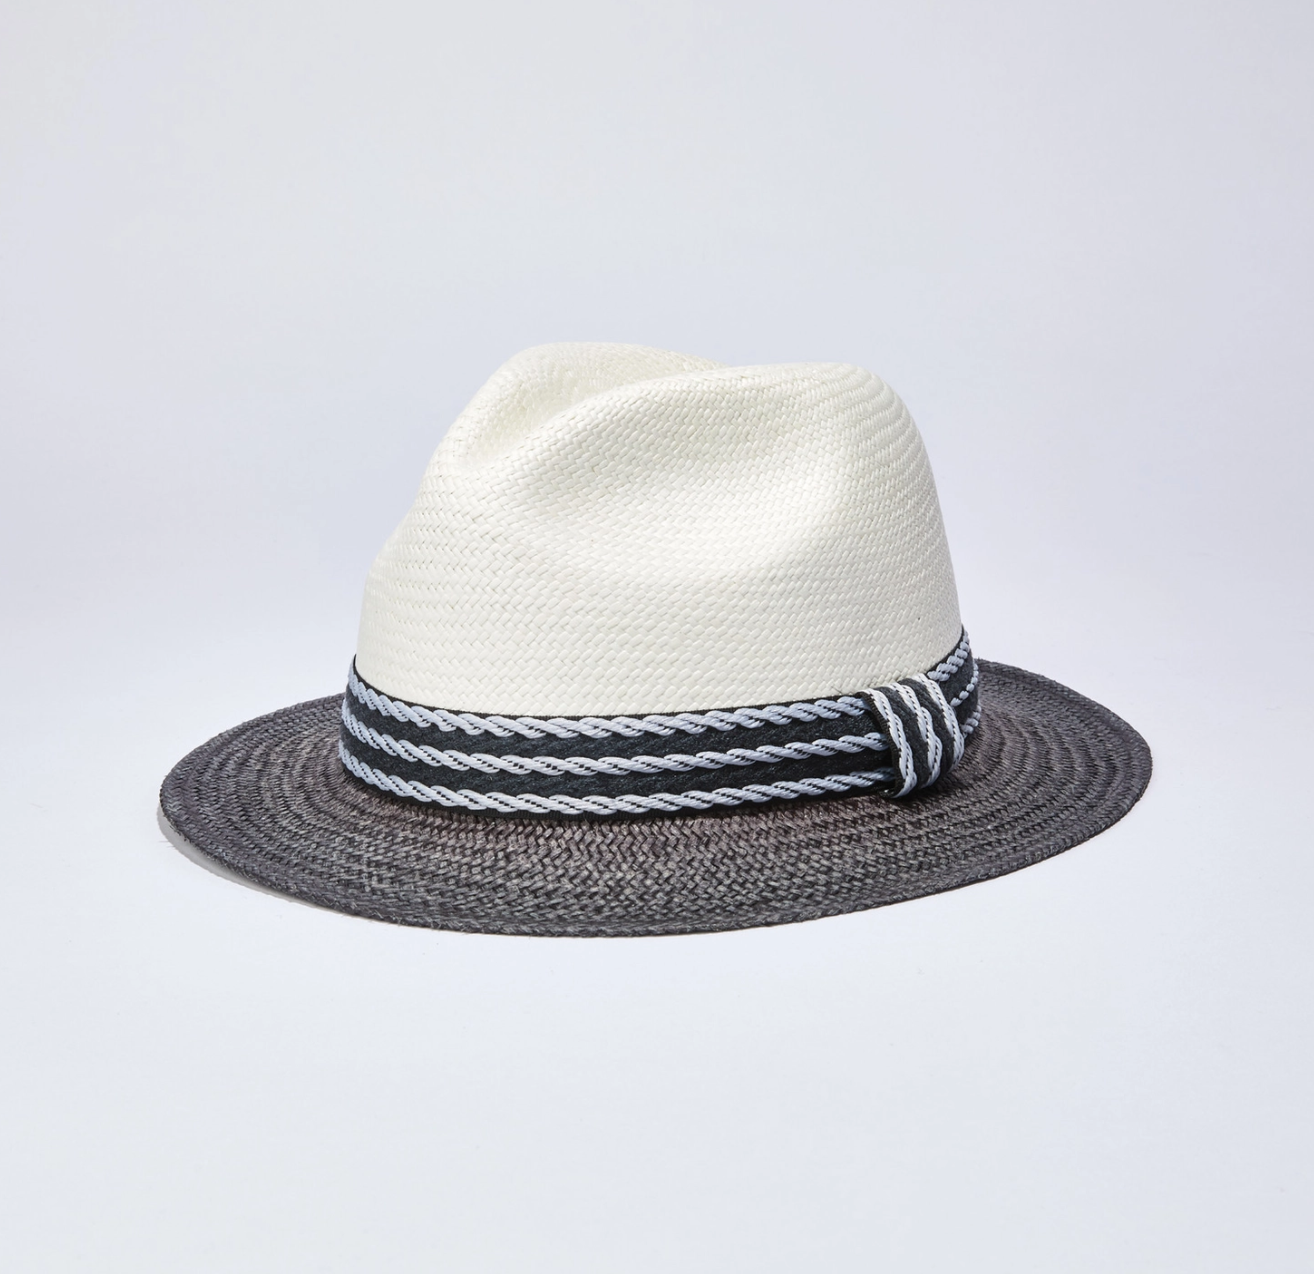 Elegancia Tropical Hats-Malibu Short Brimmed Panama Hat - Unisex